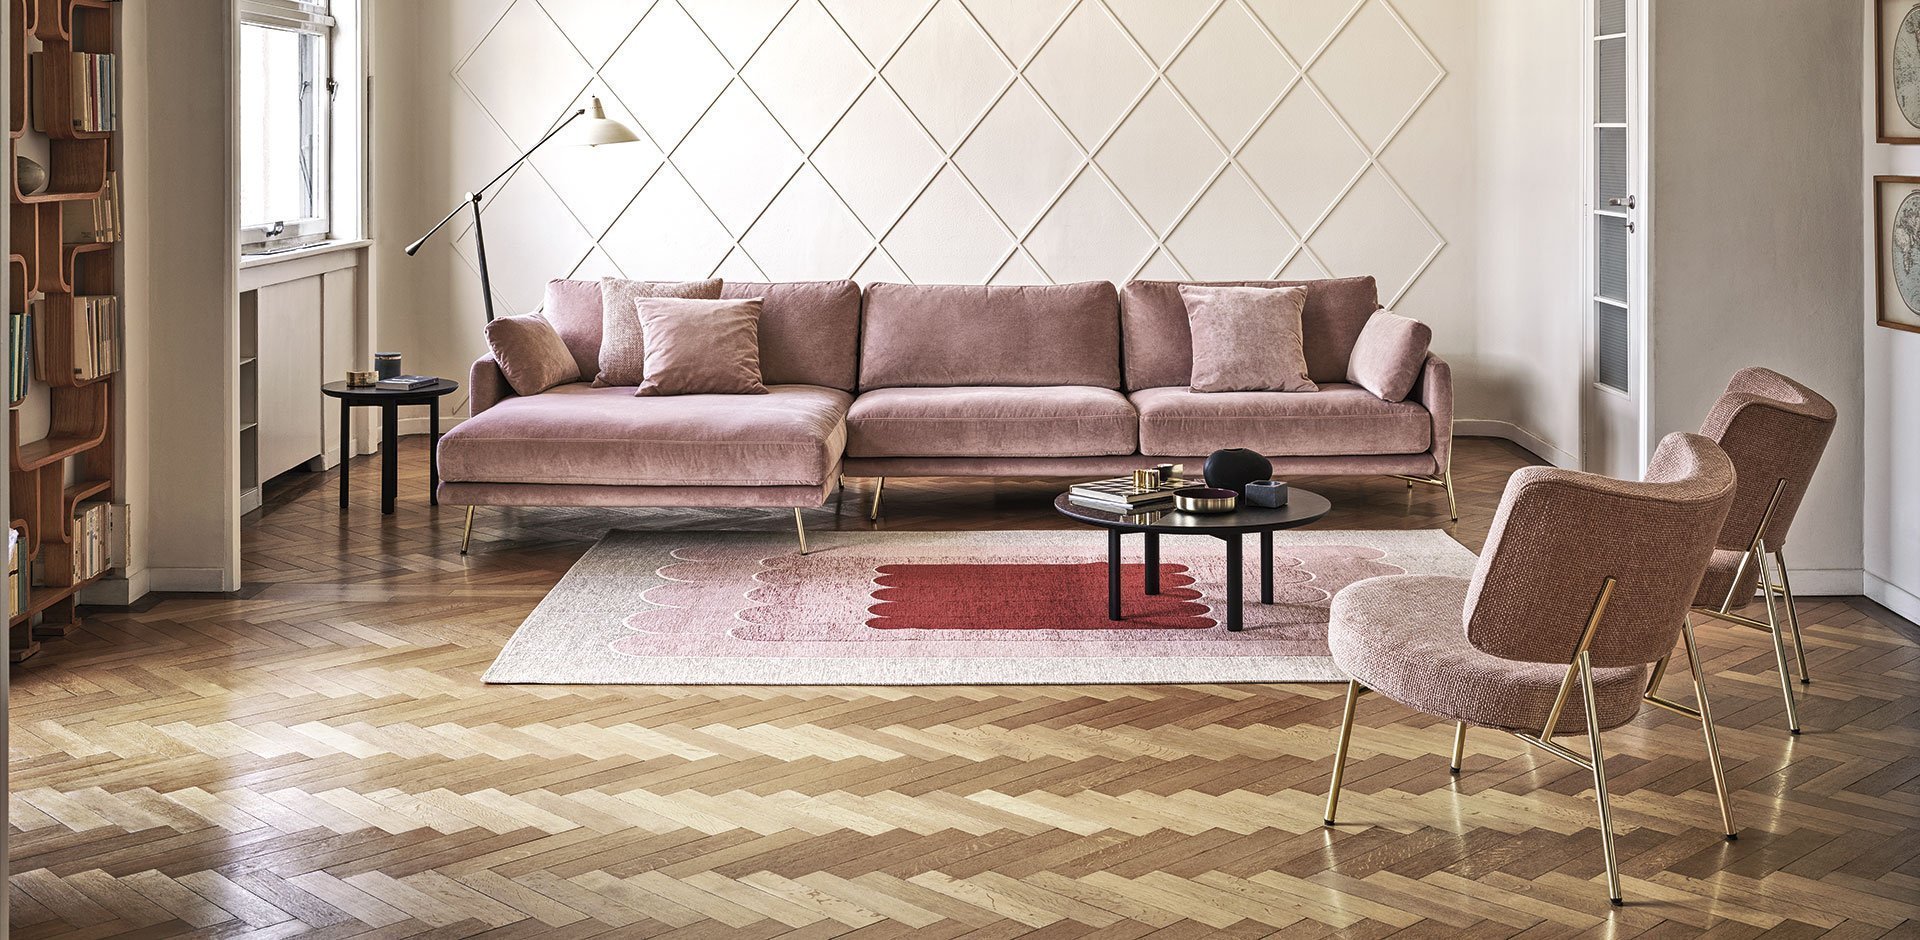 Le Marais sofa living room furniture Takis Angelides Furnihome Cyprus Calligaris